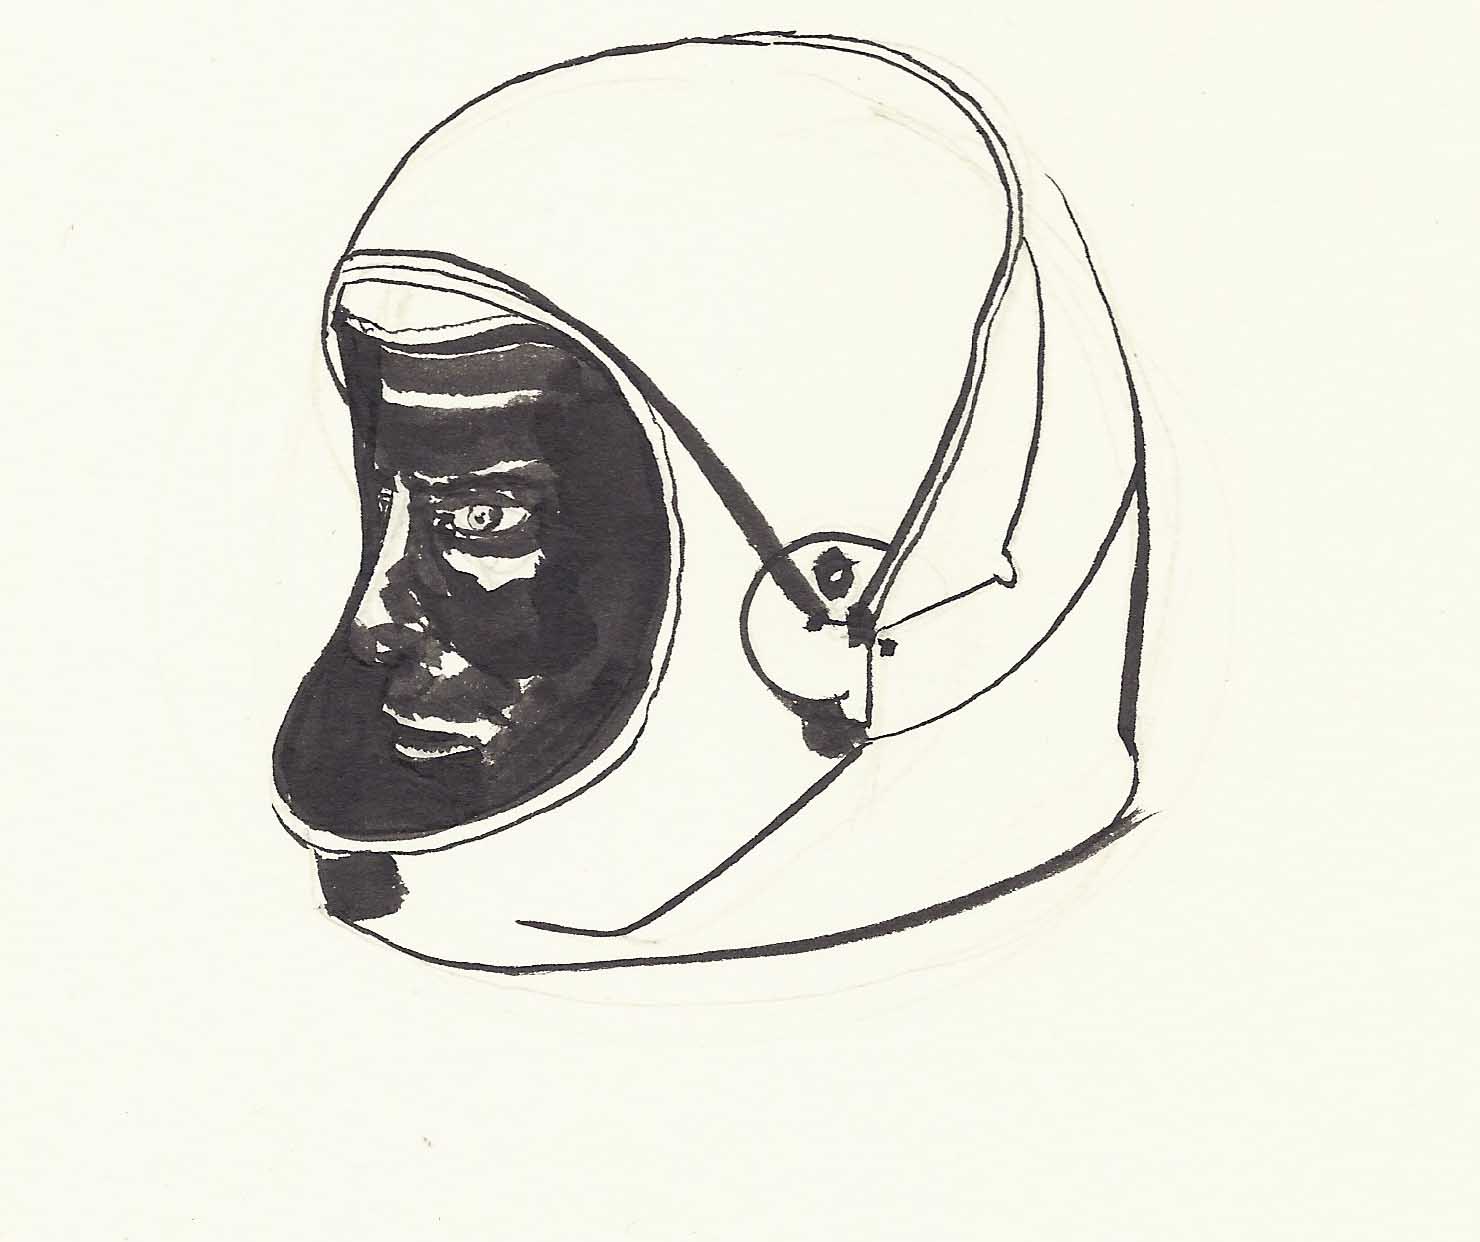 Astronaut Helmet Drawing at GetDrawings | Free download